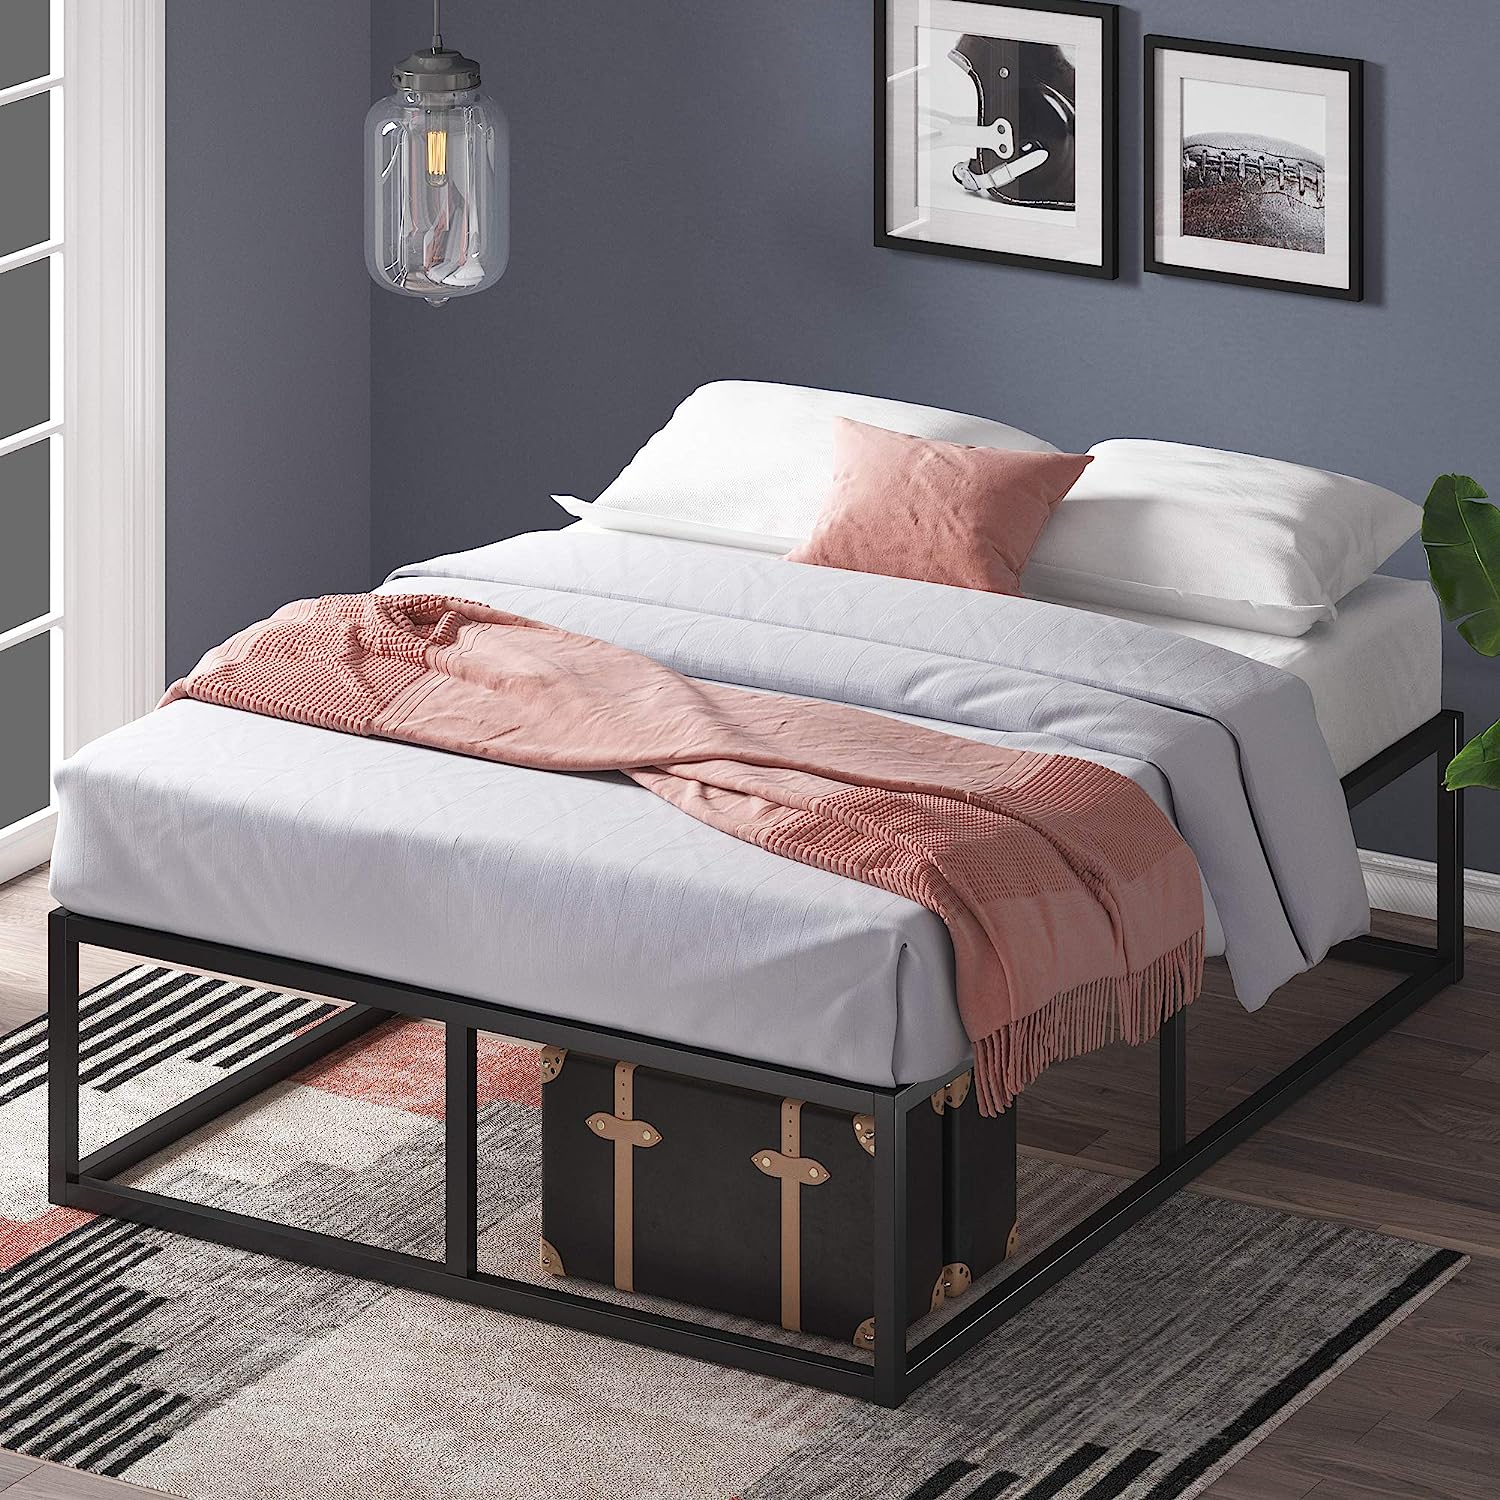 ZINUS Joseph Metal Platforma Bed Frame, Twin - $80